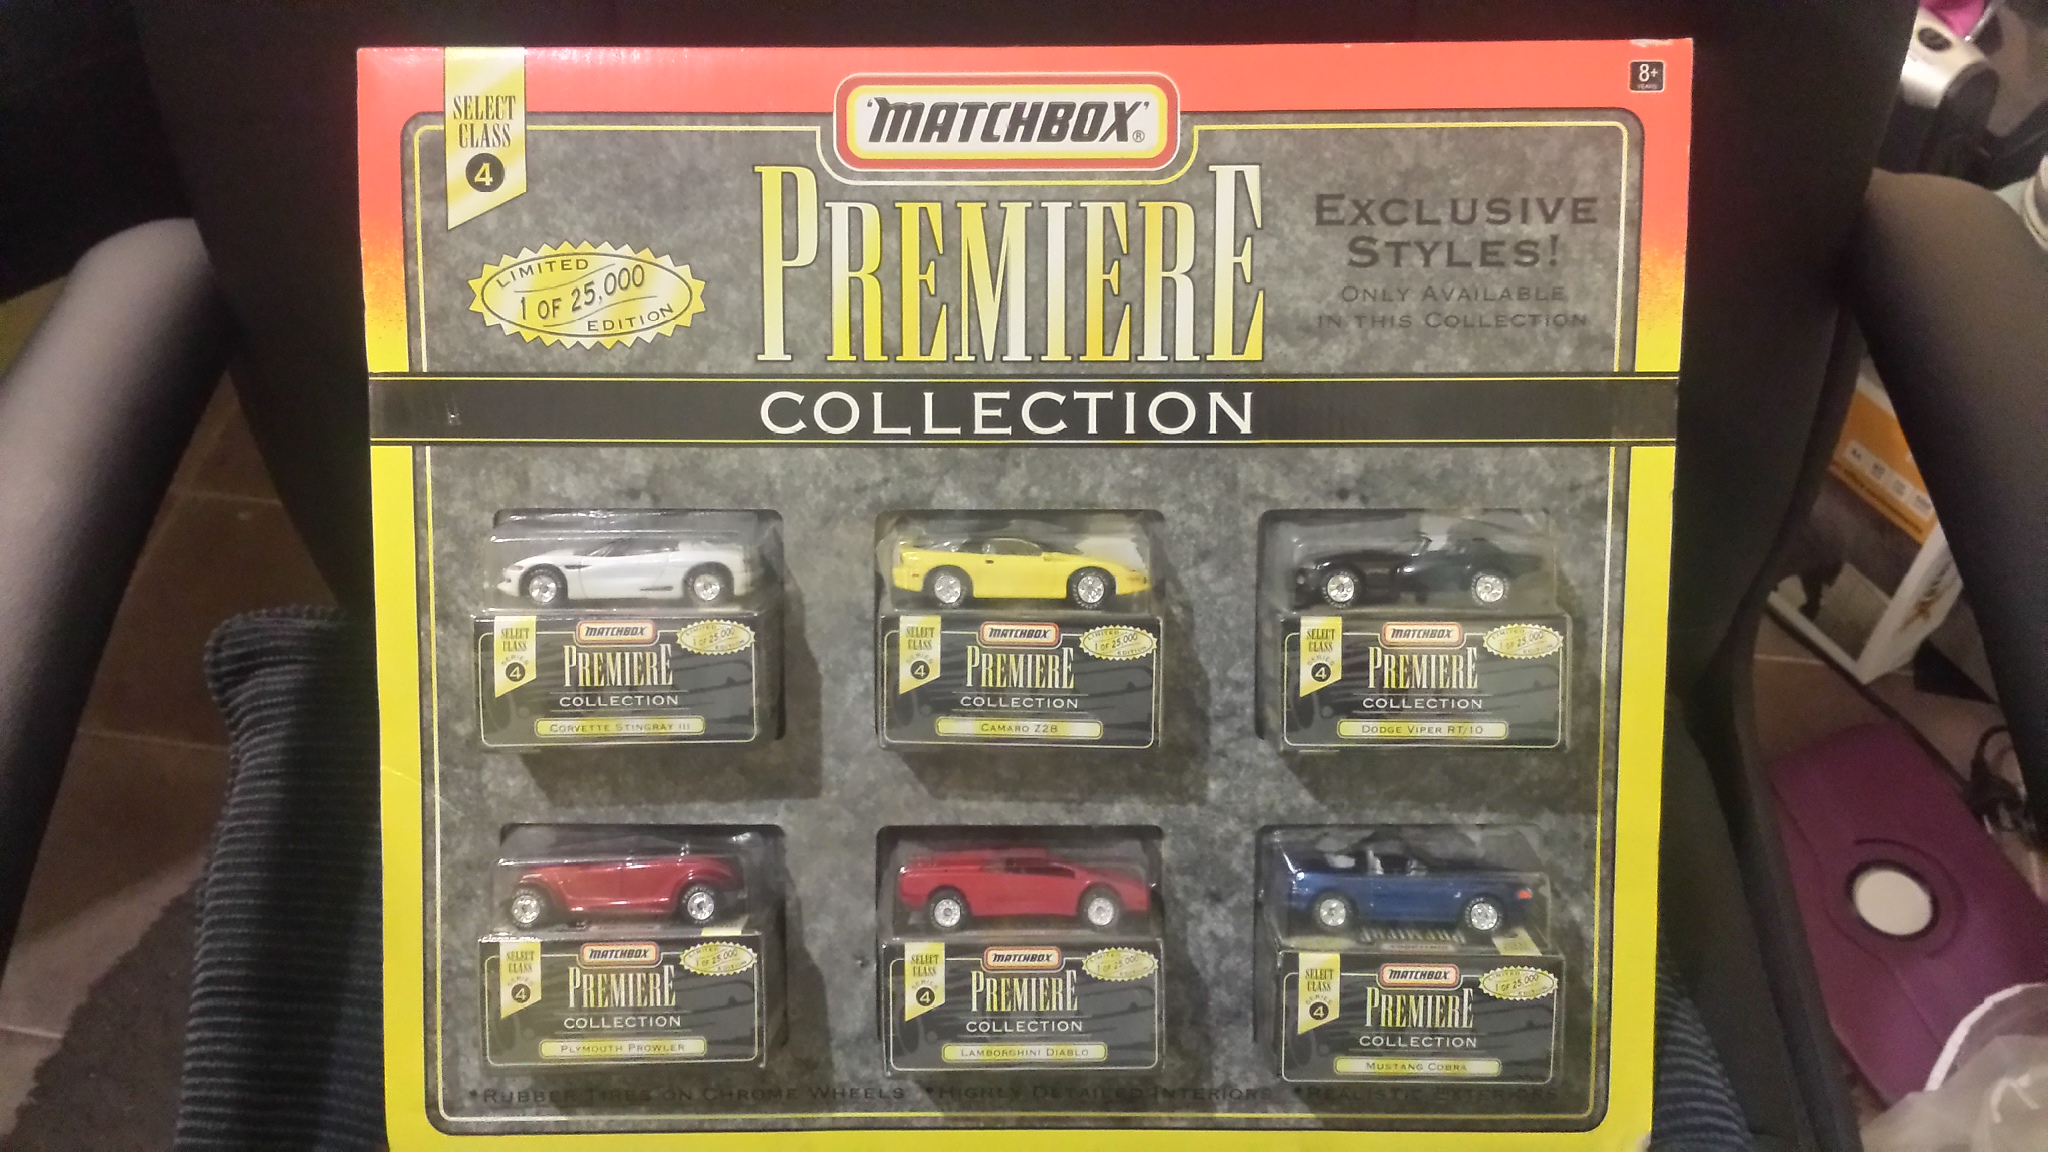 Matchbox Premiere Collection Select Class 4